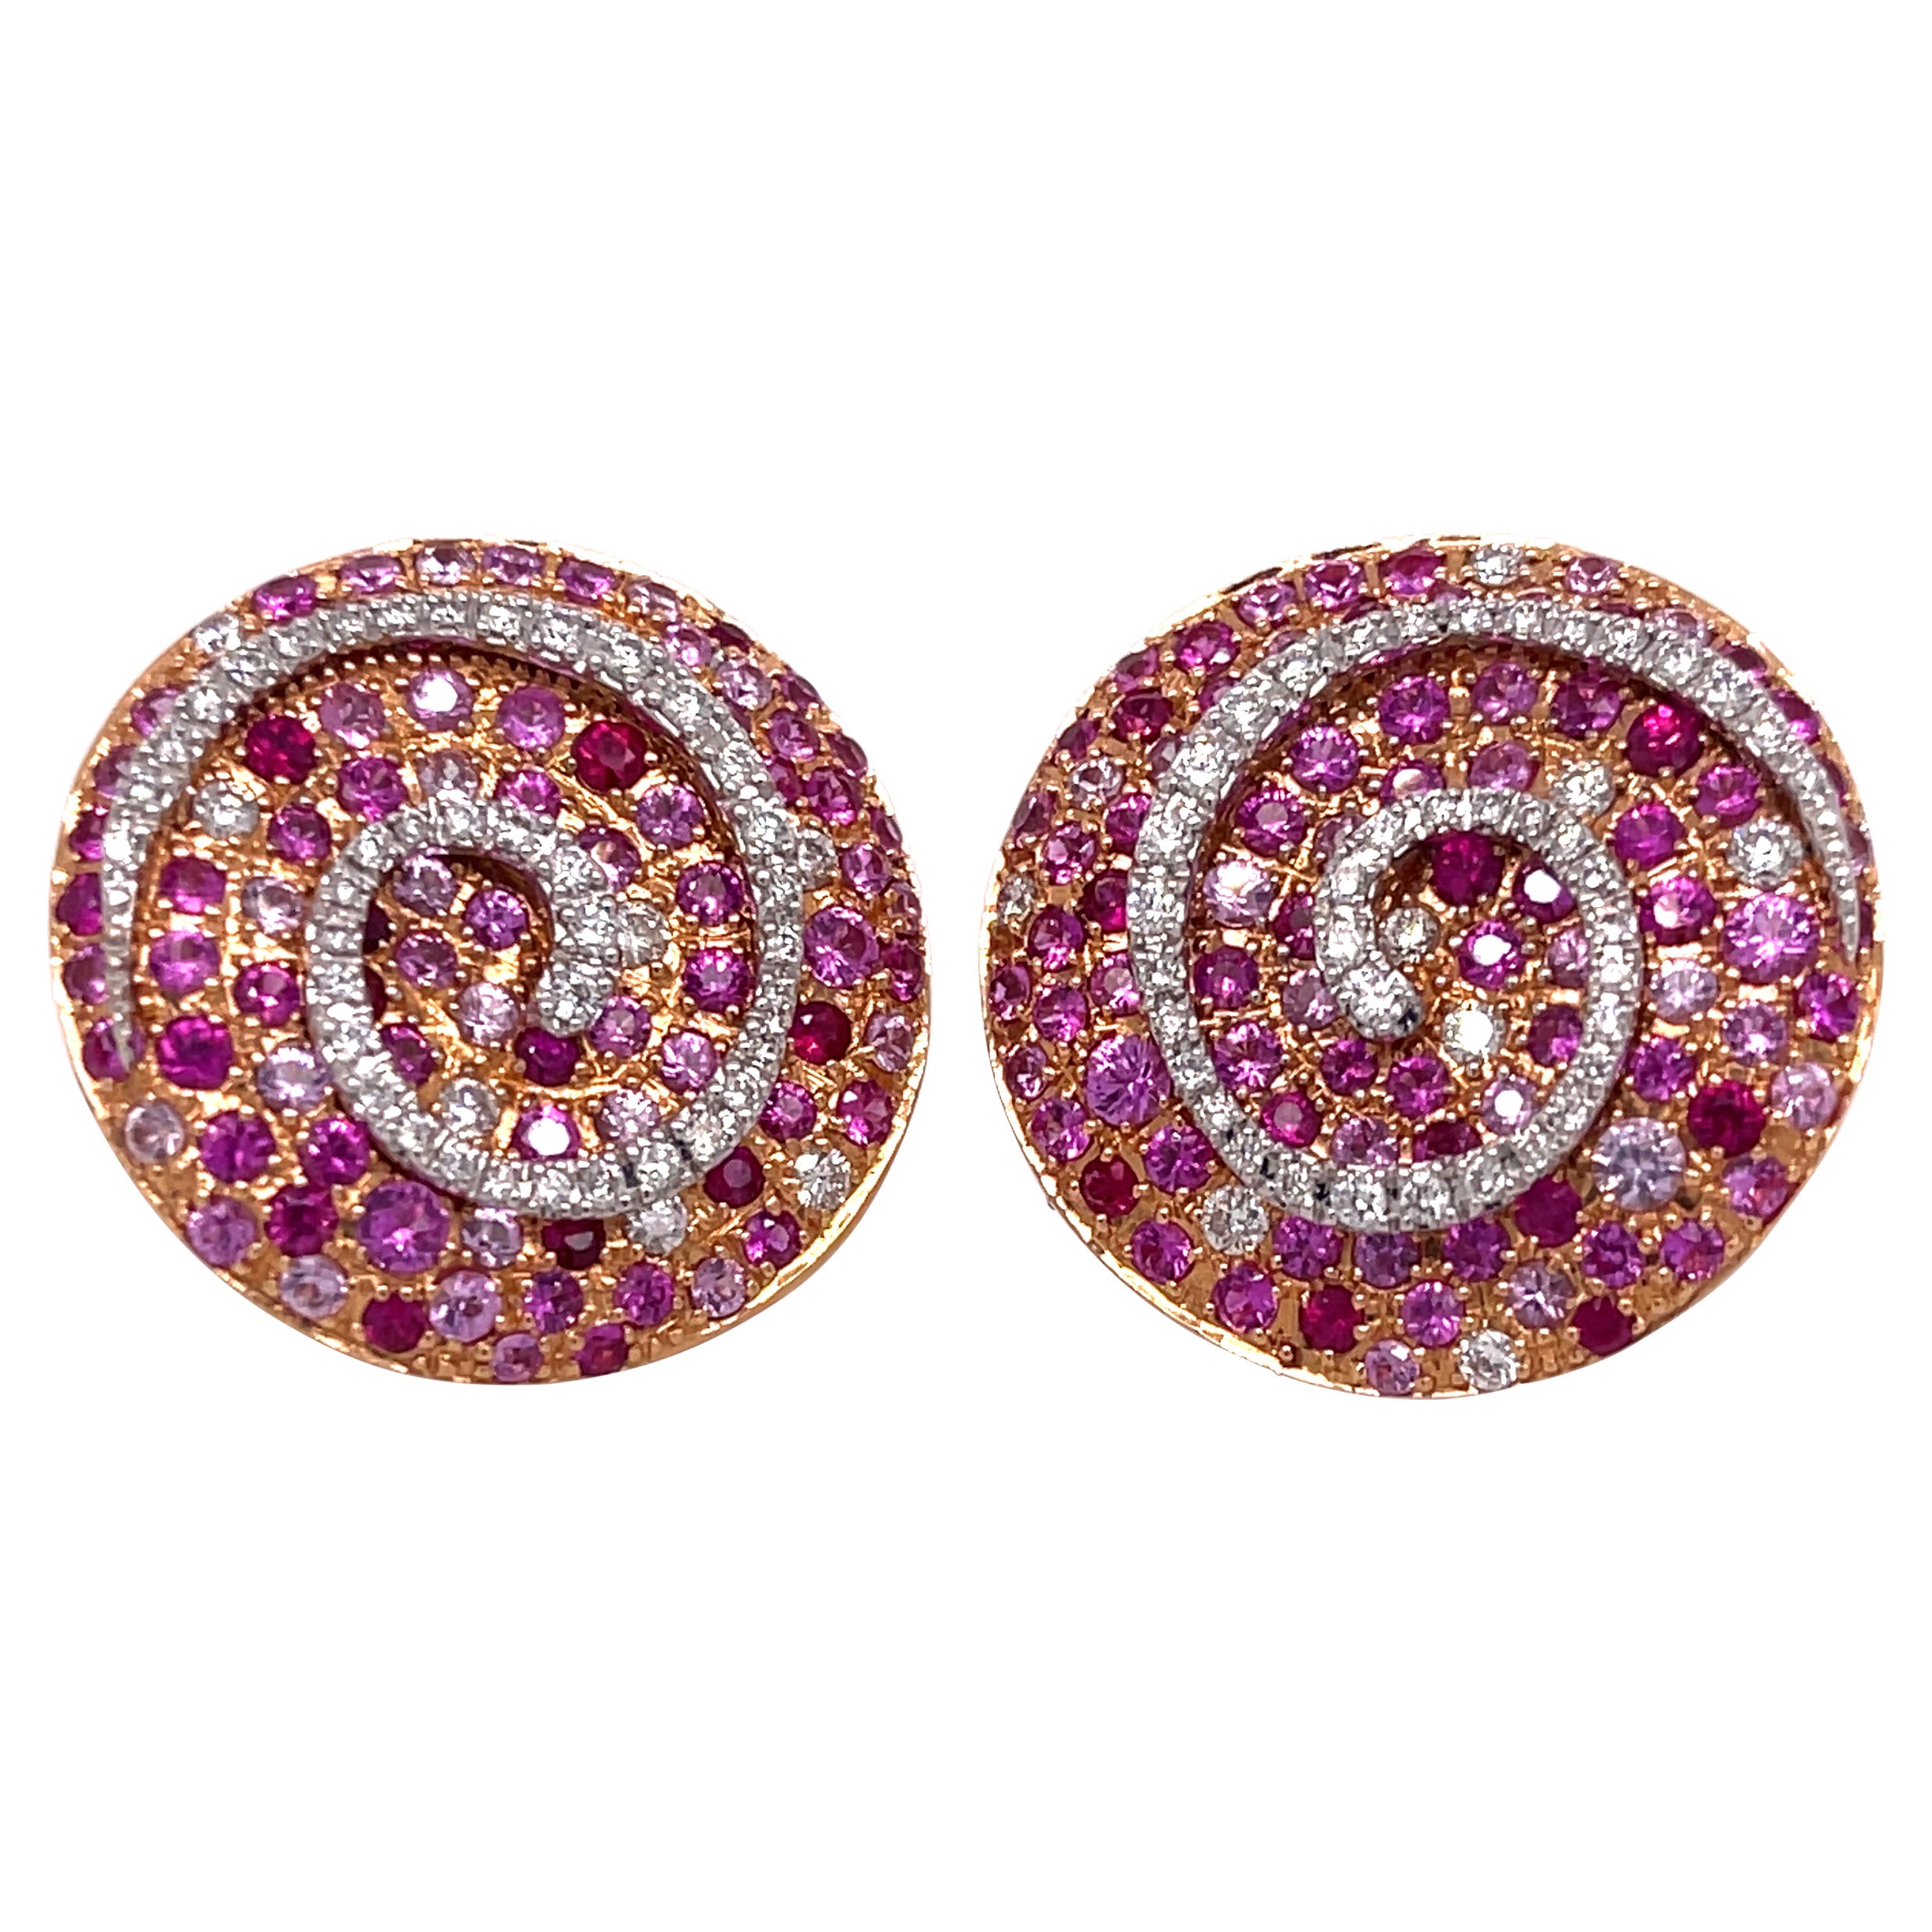 Ugo Cala Diamond, Ruby, and Sapphire 18K Earrings